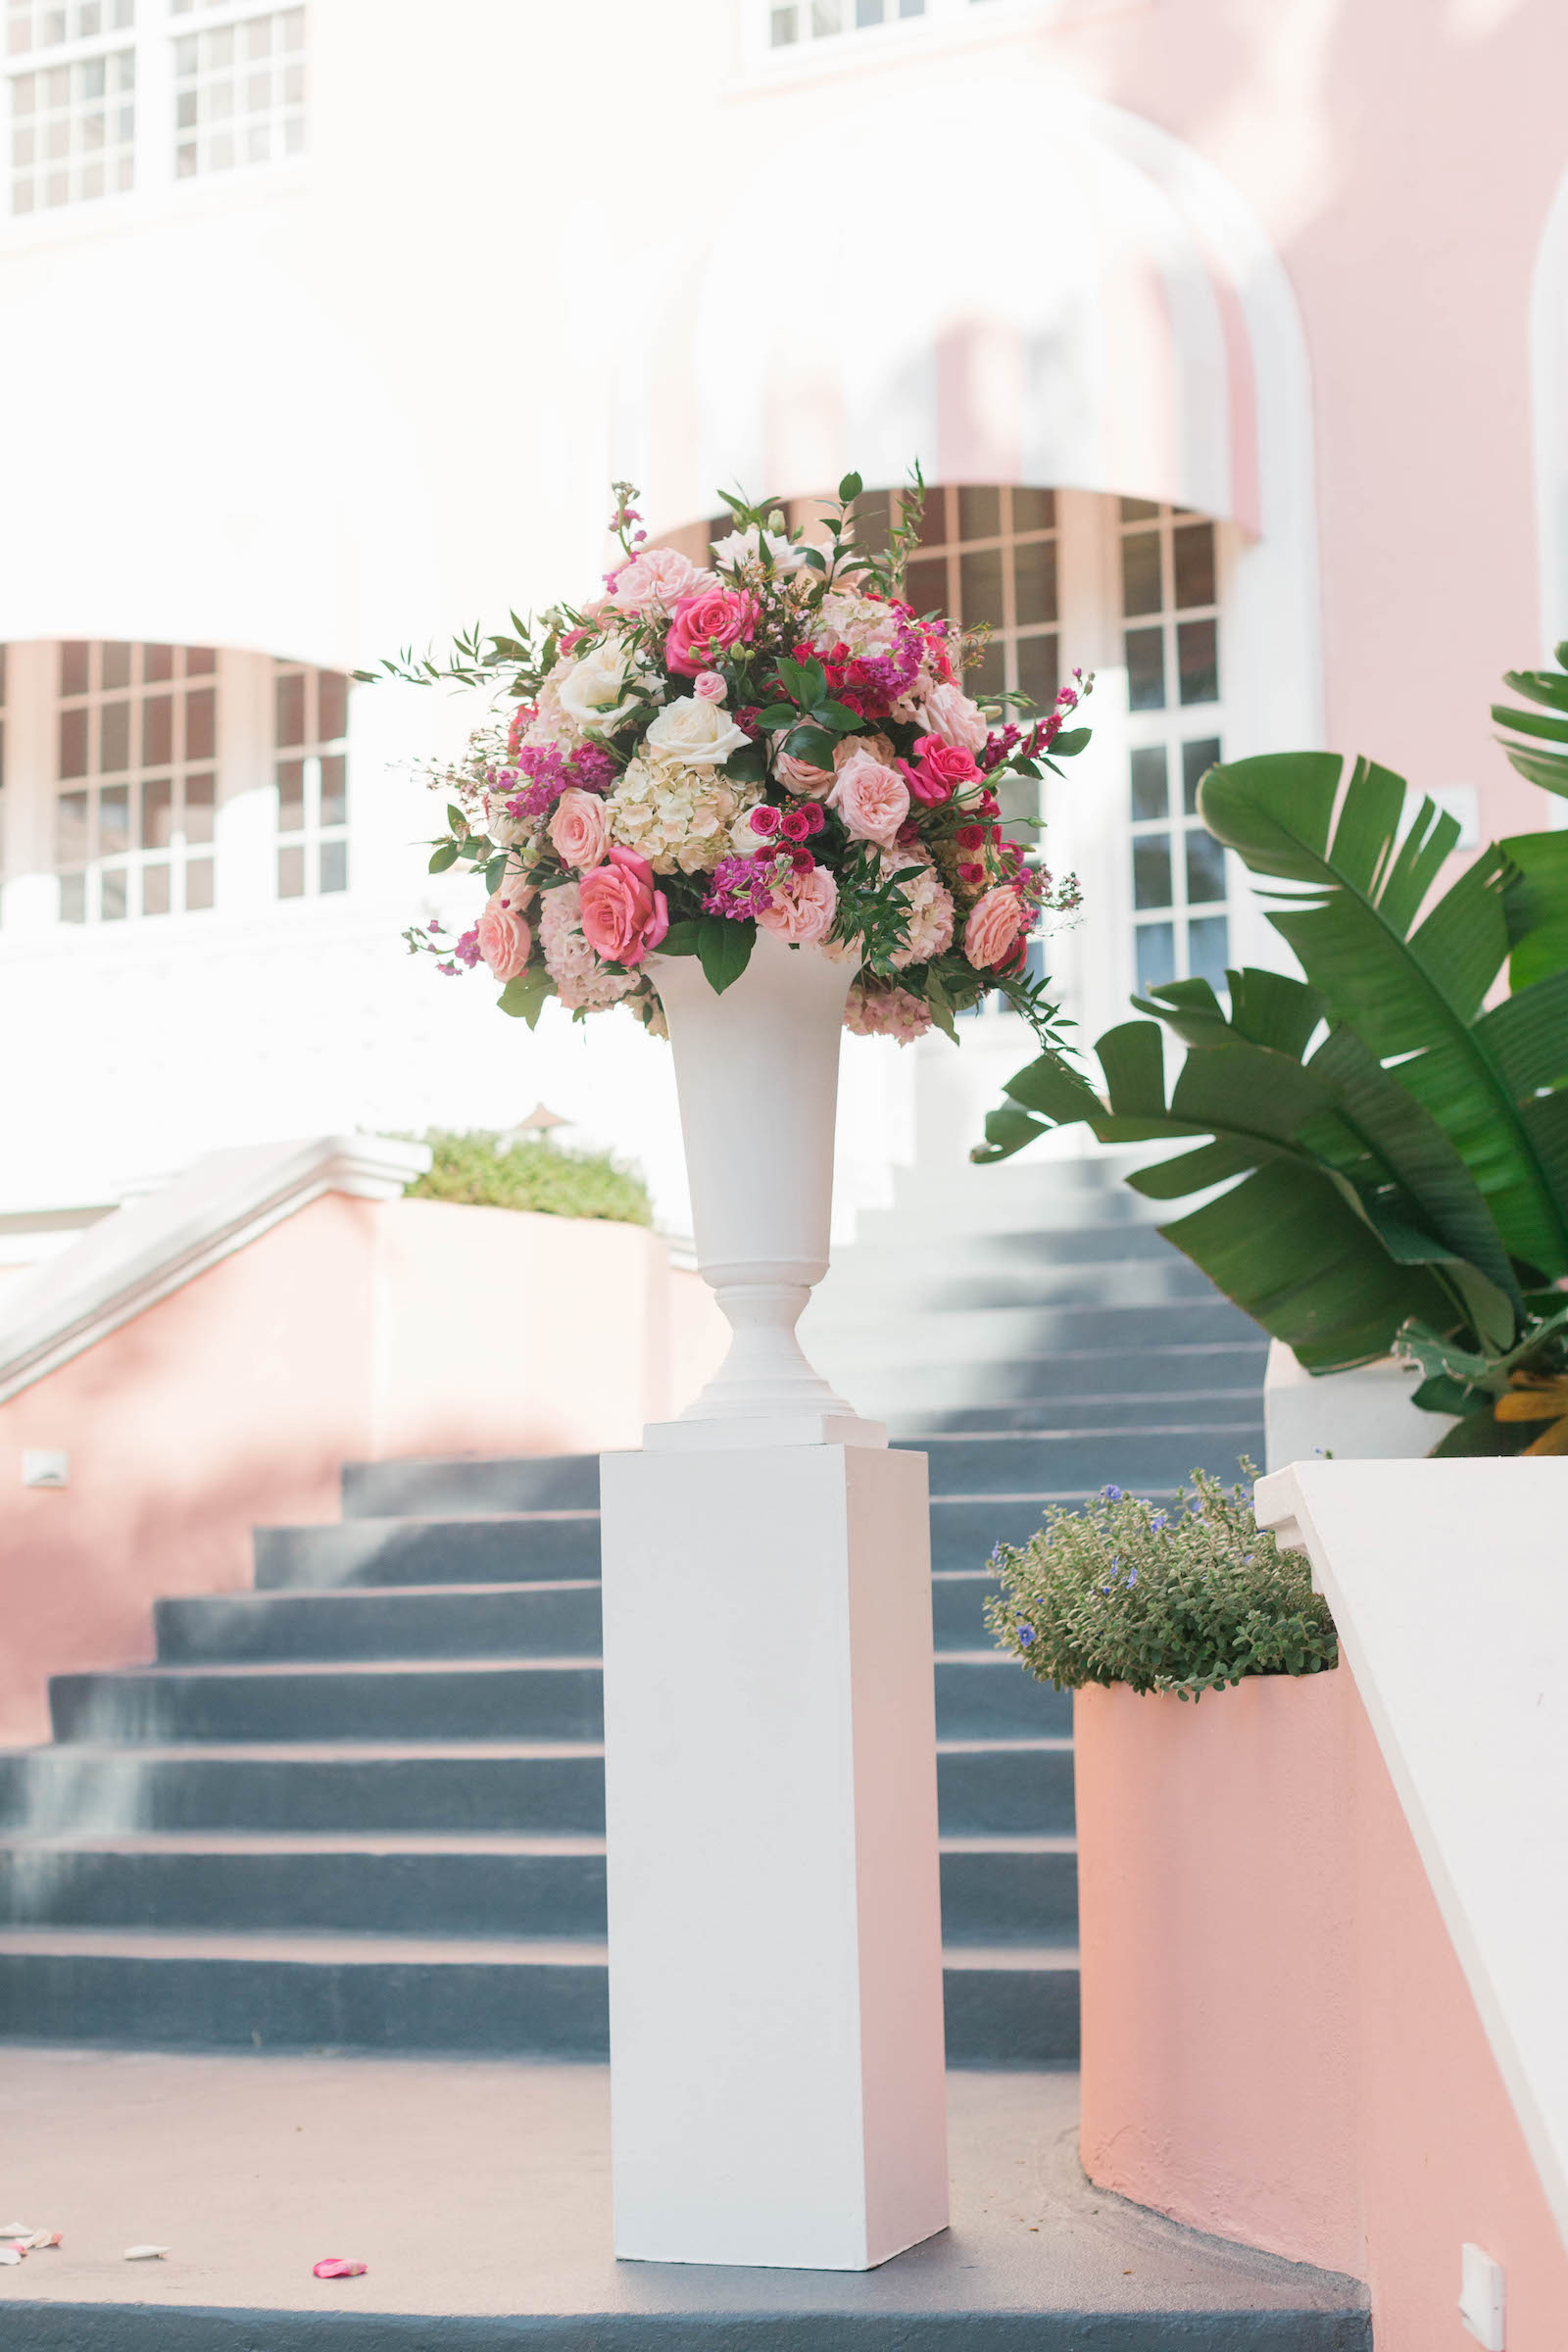 Elegant Wedding Ceremony Decor, Tall White Pedestal with Lush Vibrant Pink, White and Purple Floral Arrangement | Tampa Bay Wedding Florist Bruce Wayne Florals | Wedding Planner Parties A'la Carte